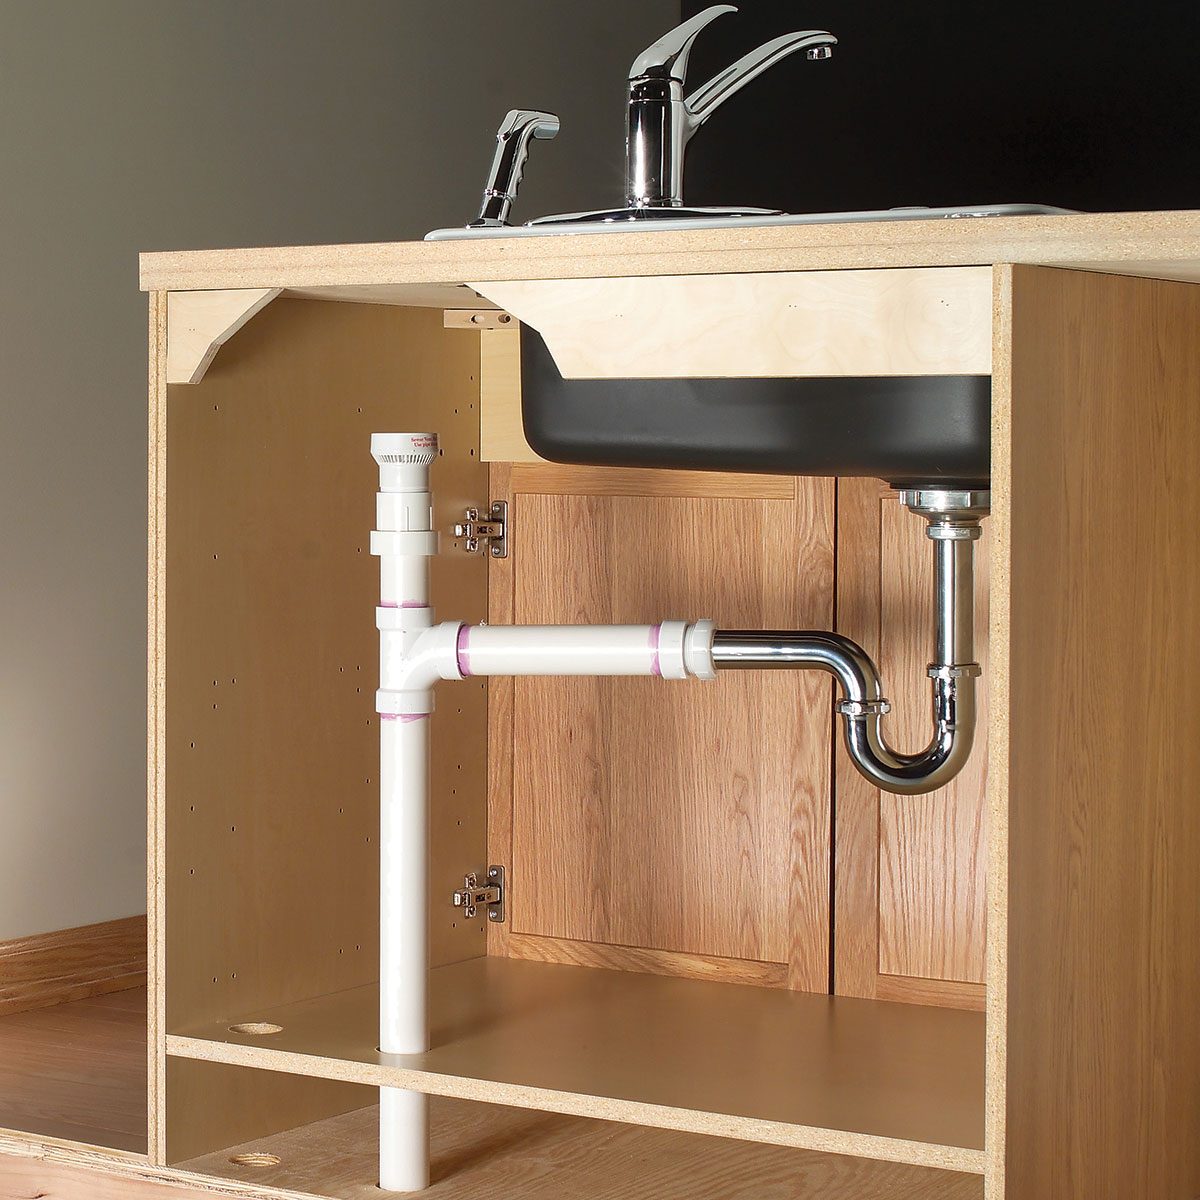 two ways to plumb an island sink family handyman peninsula kitchen 4 wood legs